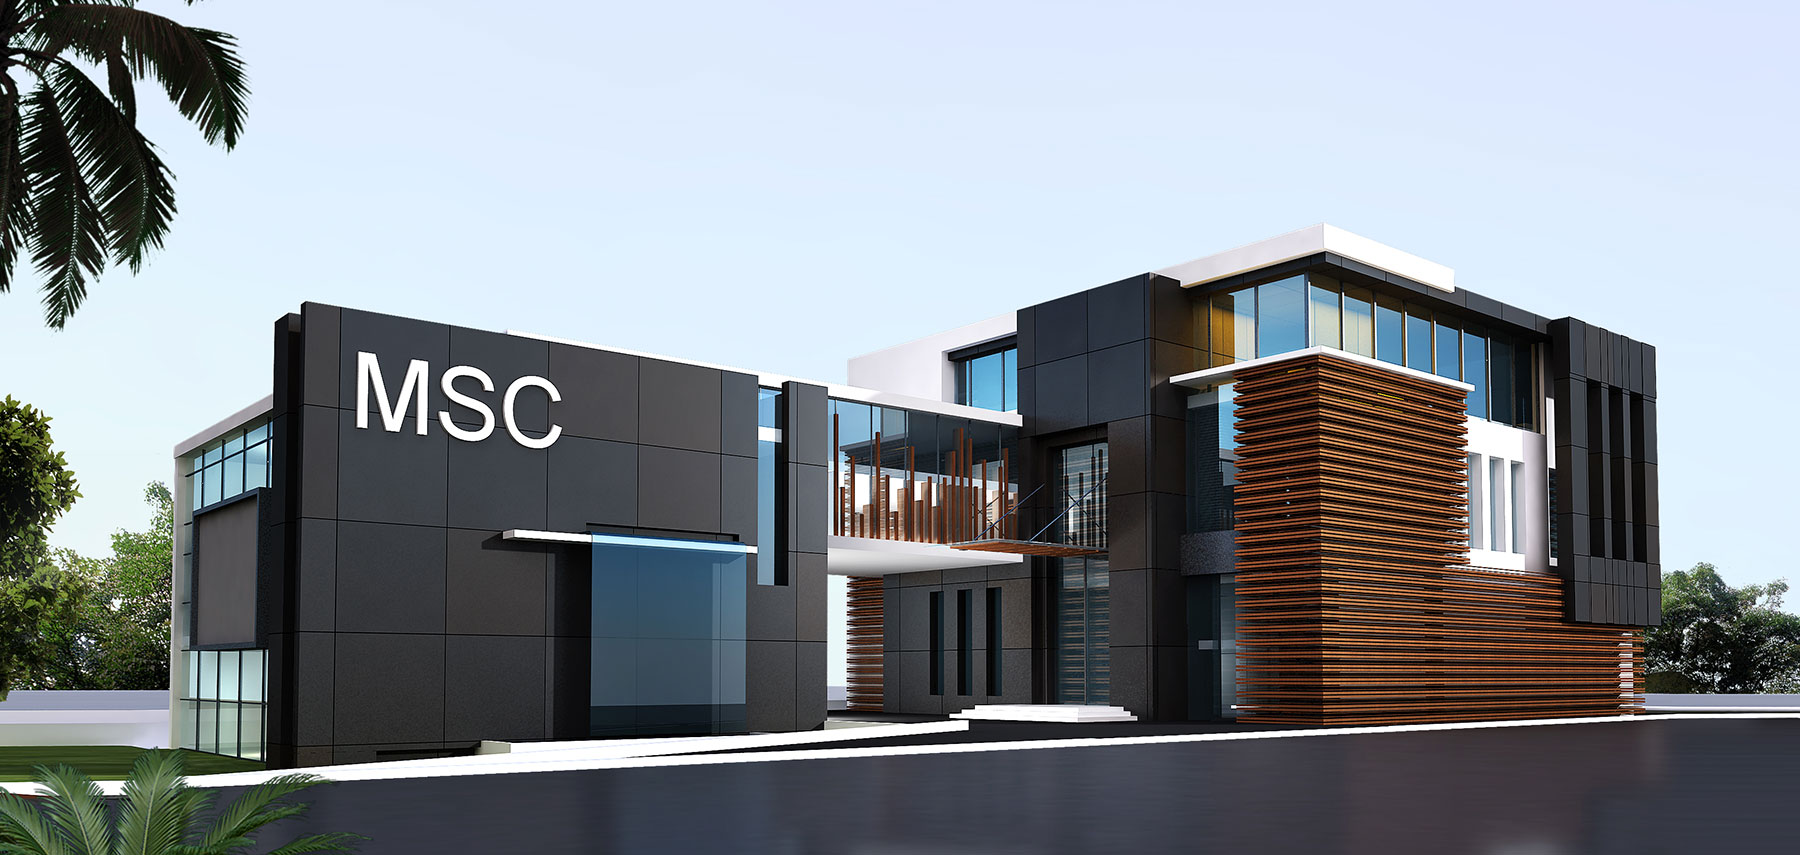 msc cruises headquarters address